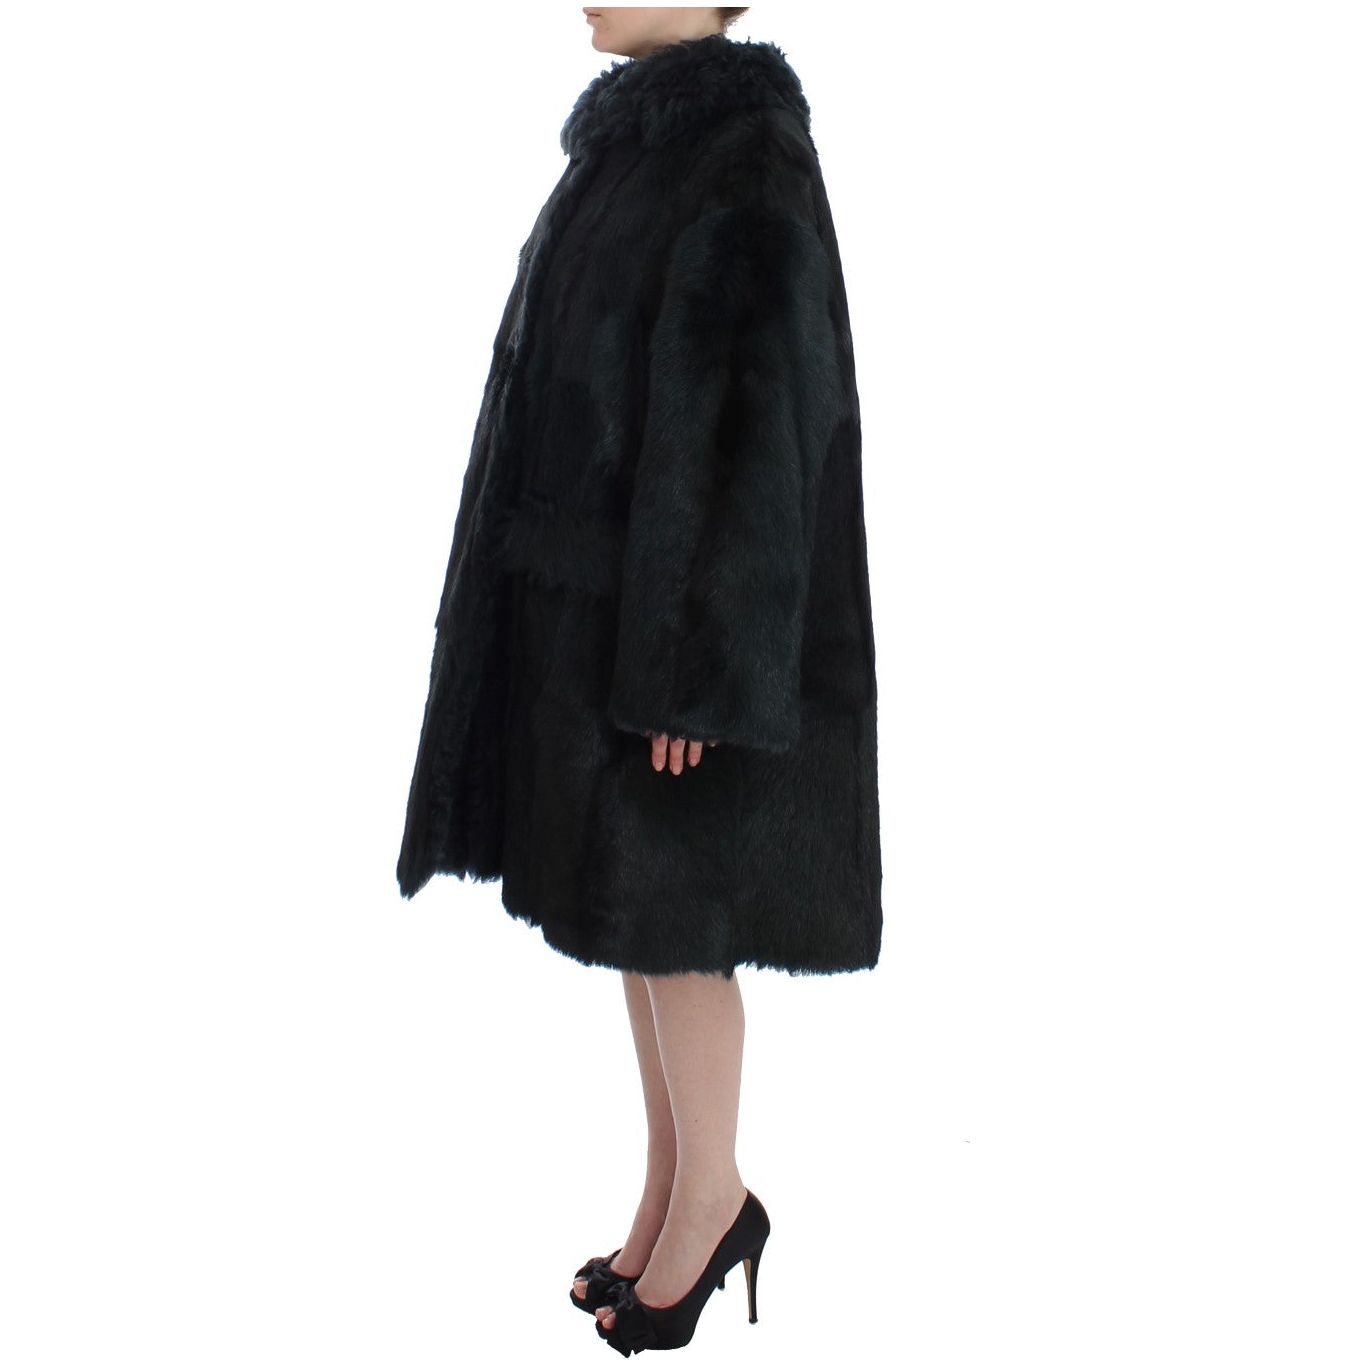 Dolce & Gabbana Exquisite Shearling Coat Jacket black-goat-fur-shearling-long-jacket-coat 62390-black-goat-fur-shearling-long-jacket-coat-2.jpg